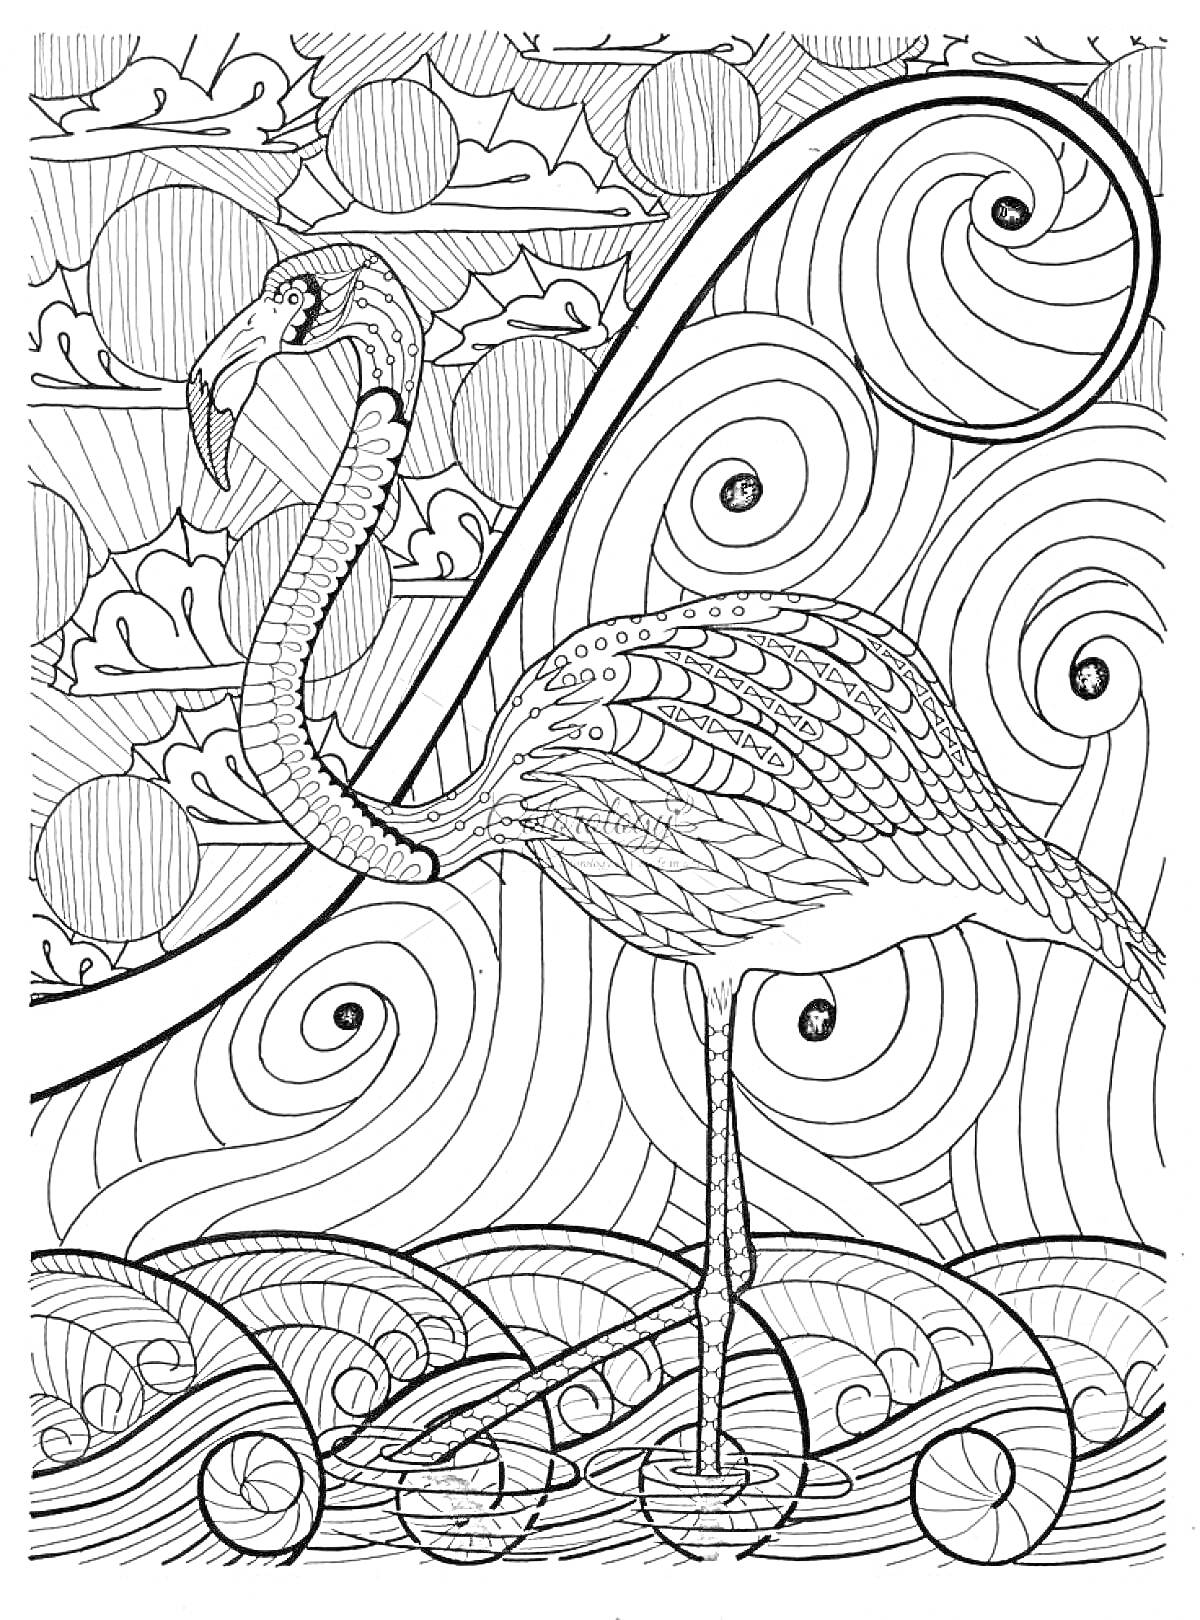 Антистресс фламинго с узорами, кругами, волнистыми линиями и облаками